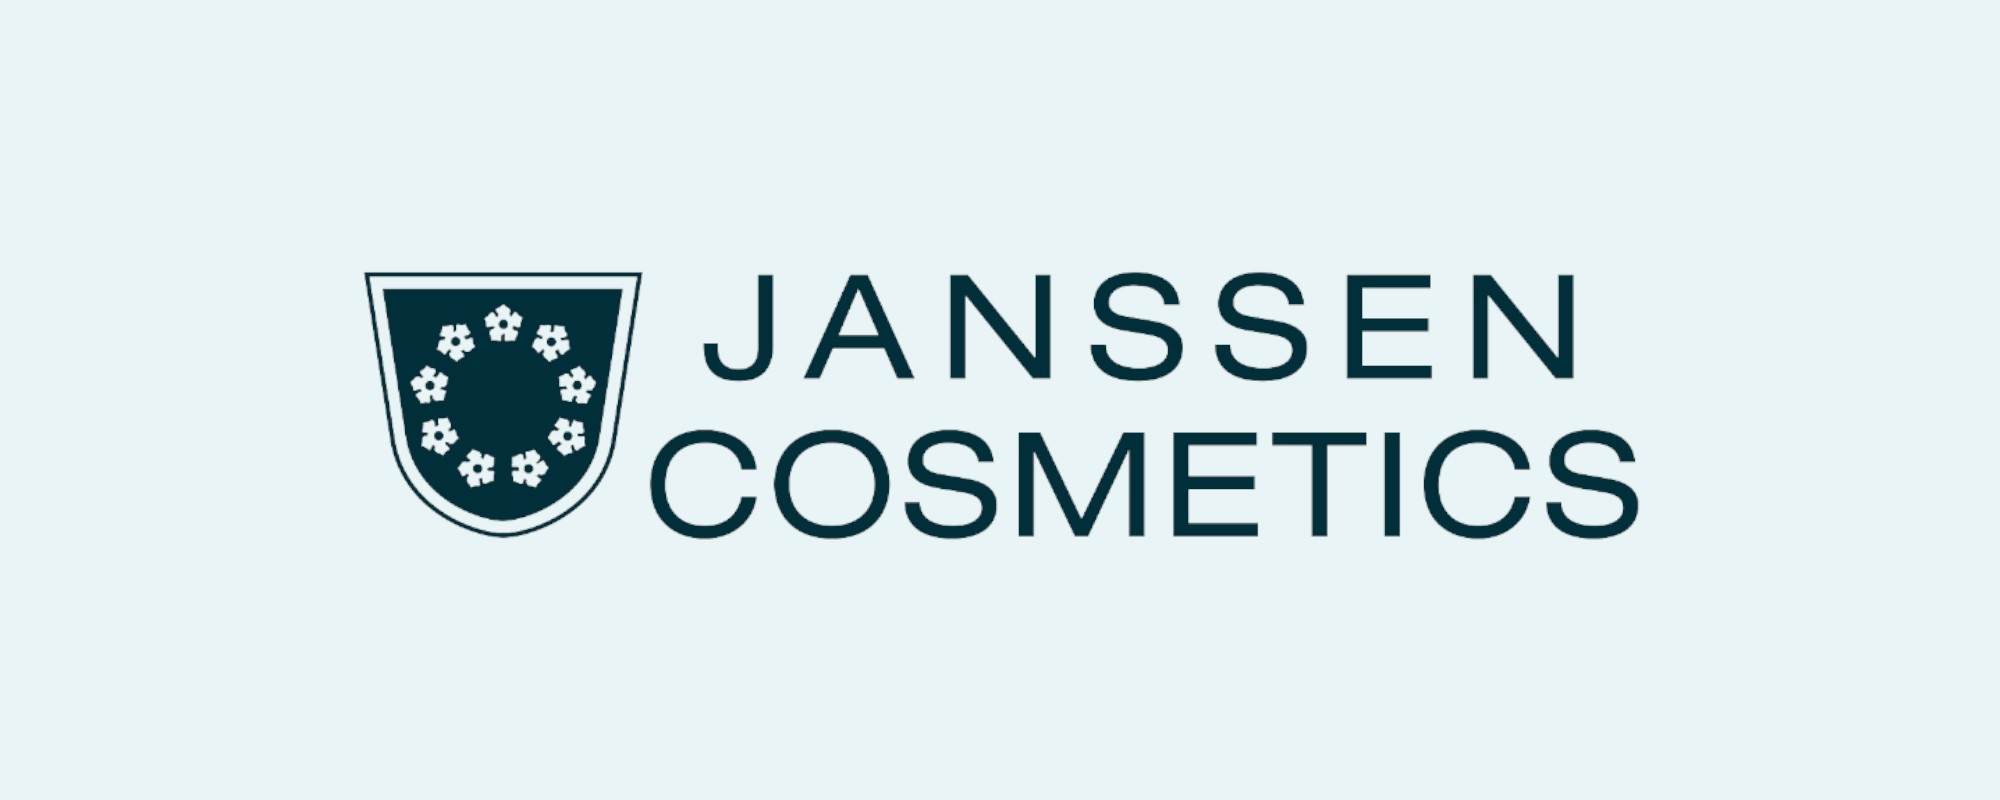 Janssen Cosmetics Logo dunkel Abstand